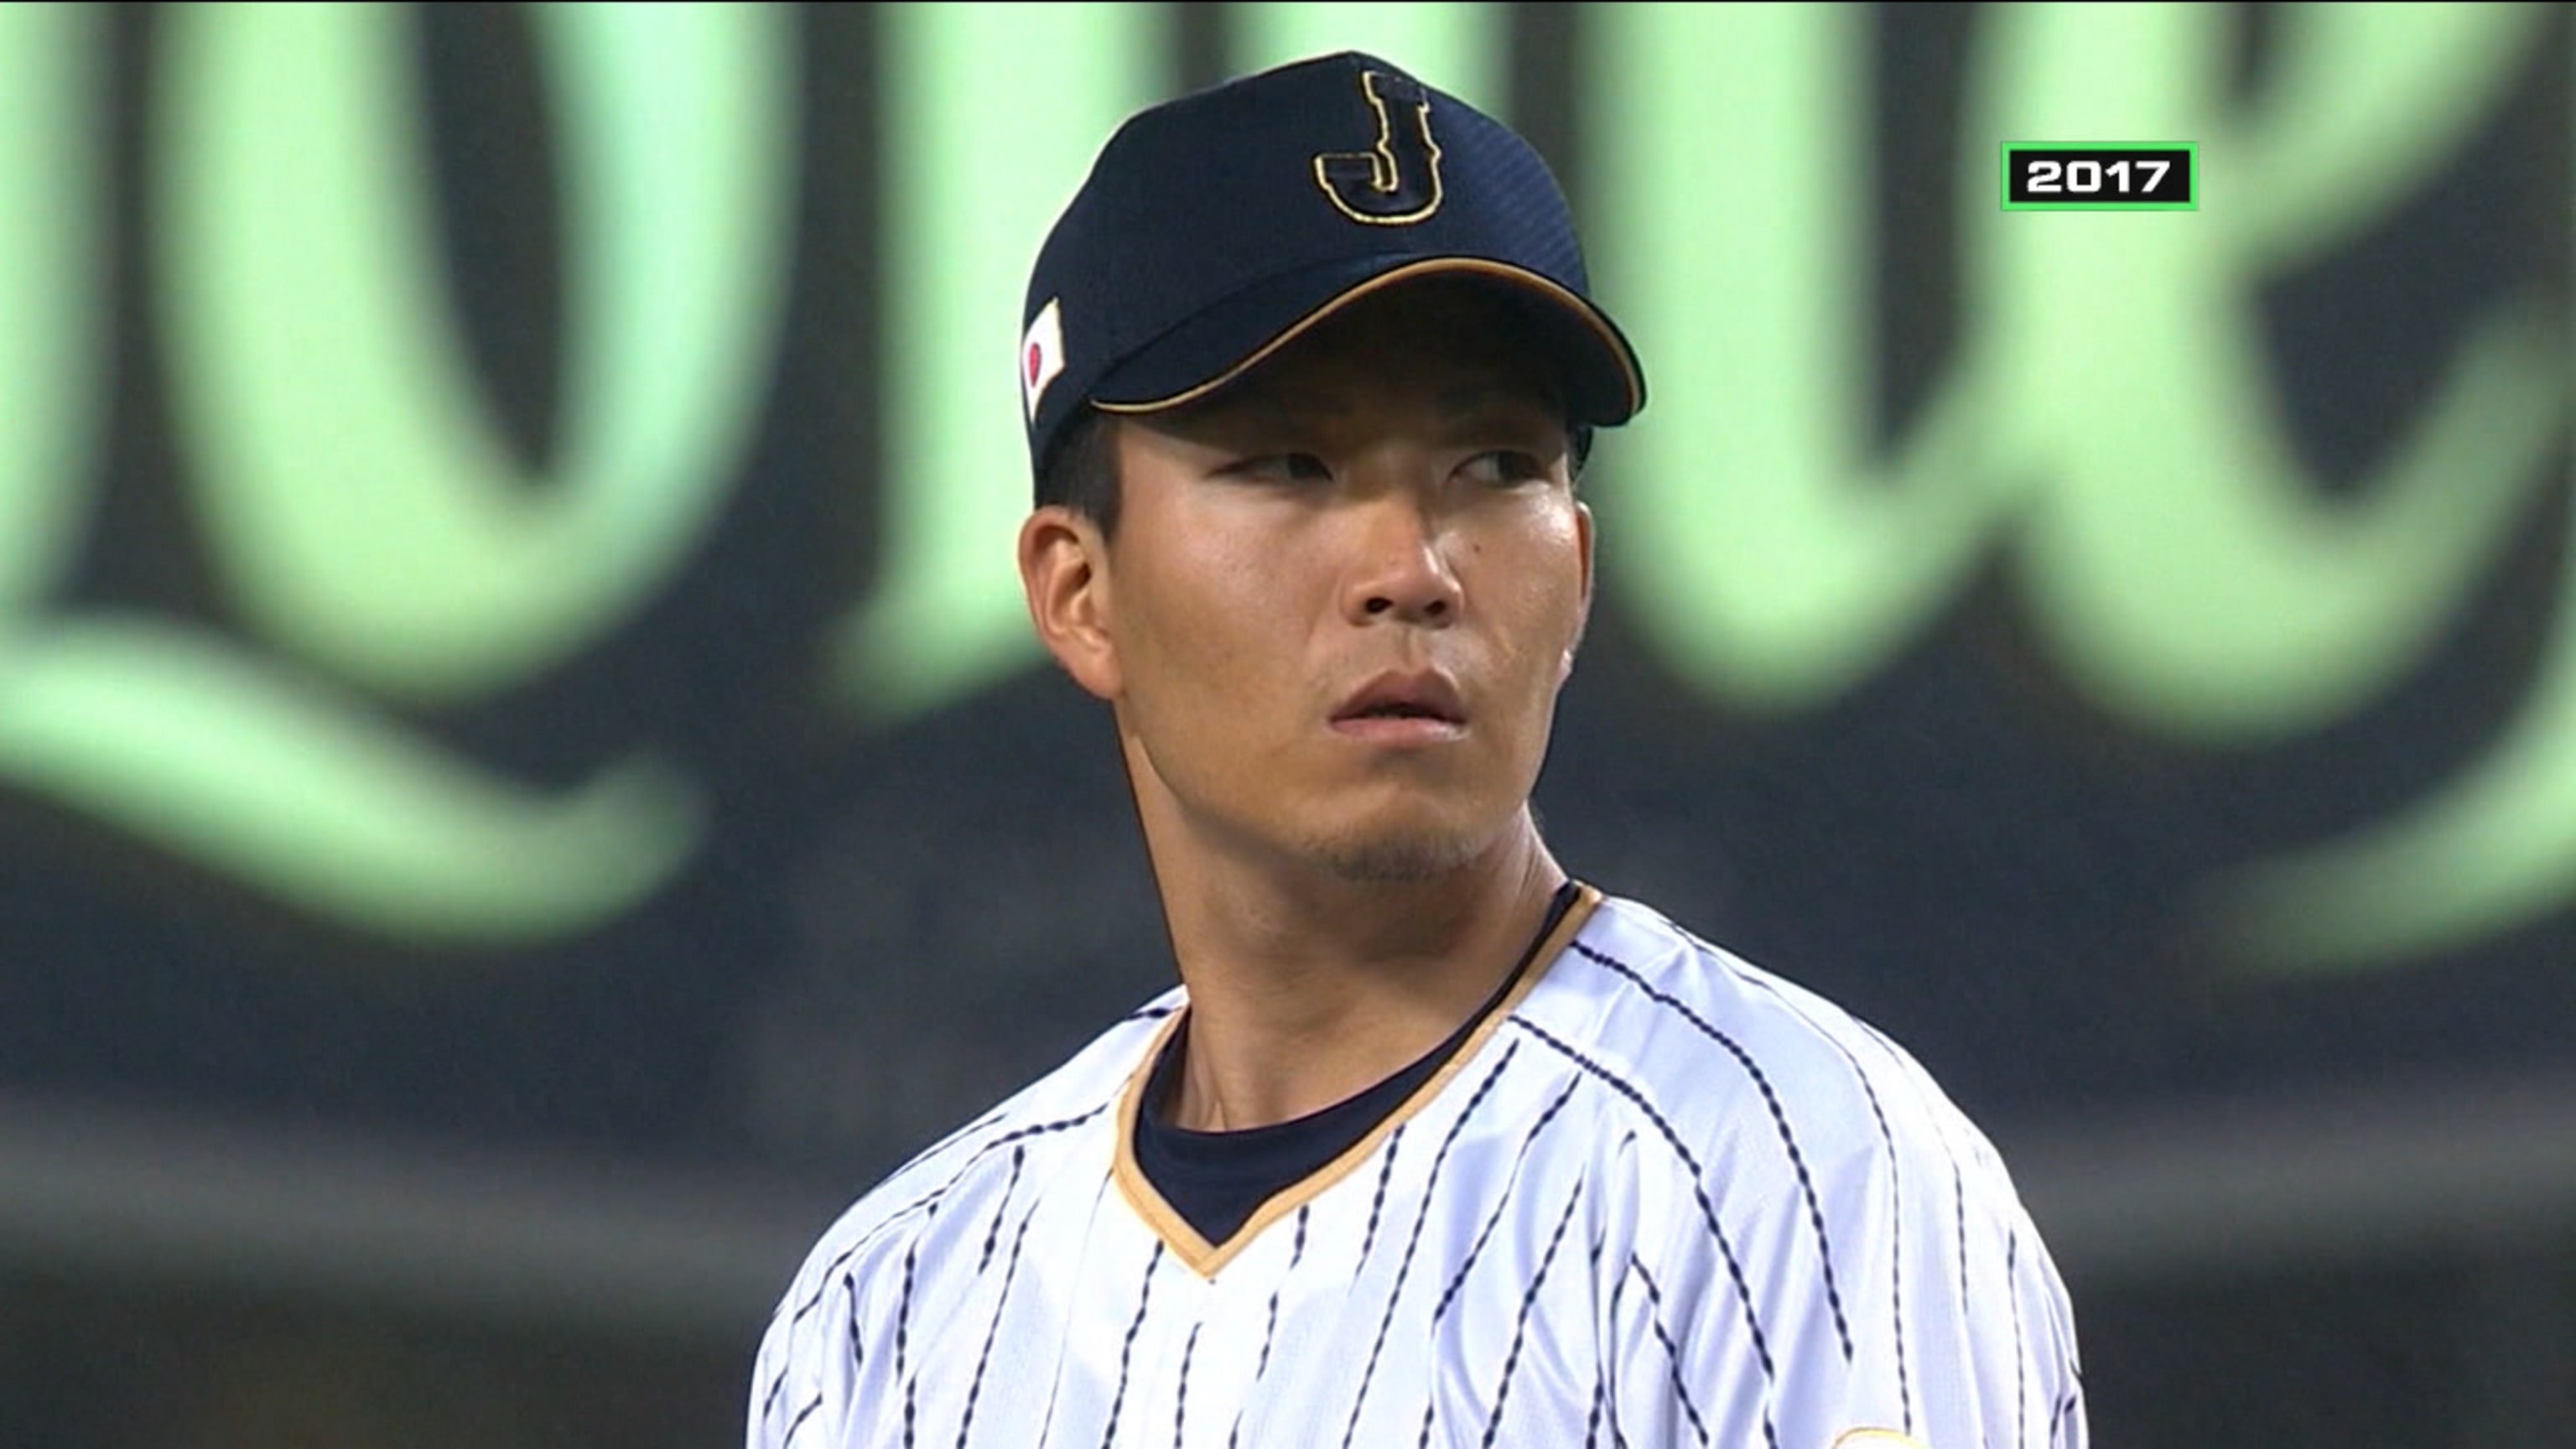 Baseball: Japanese right-hander Kodai Senga joins Mets on 5-year deal